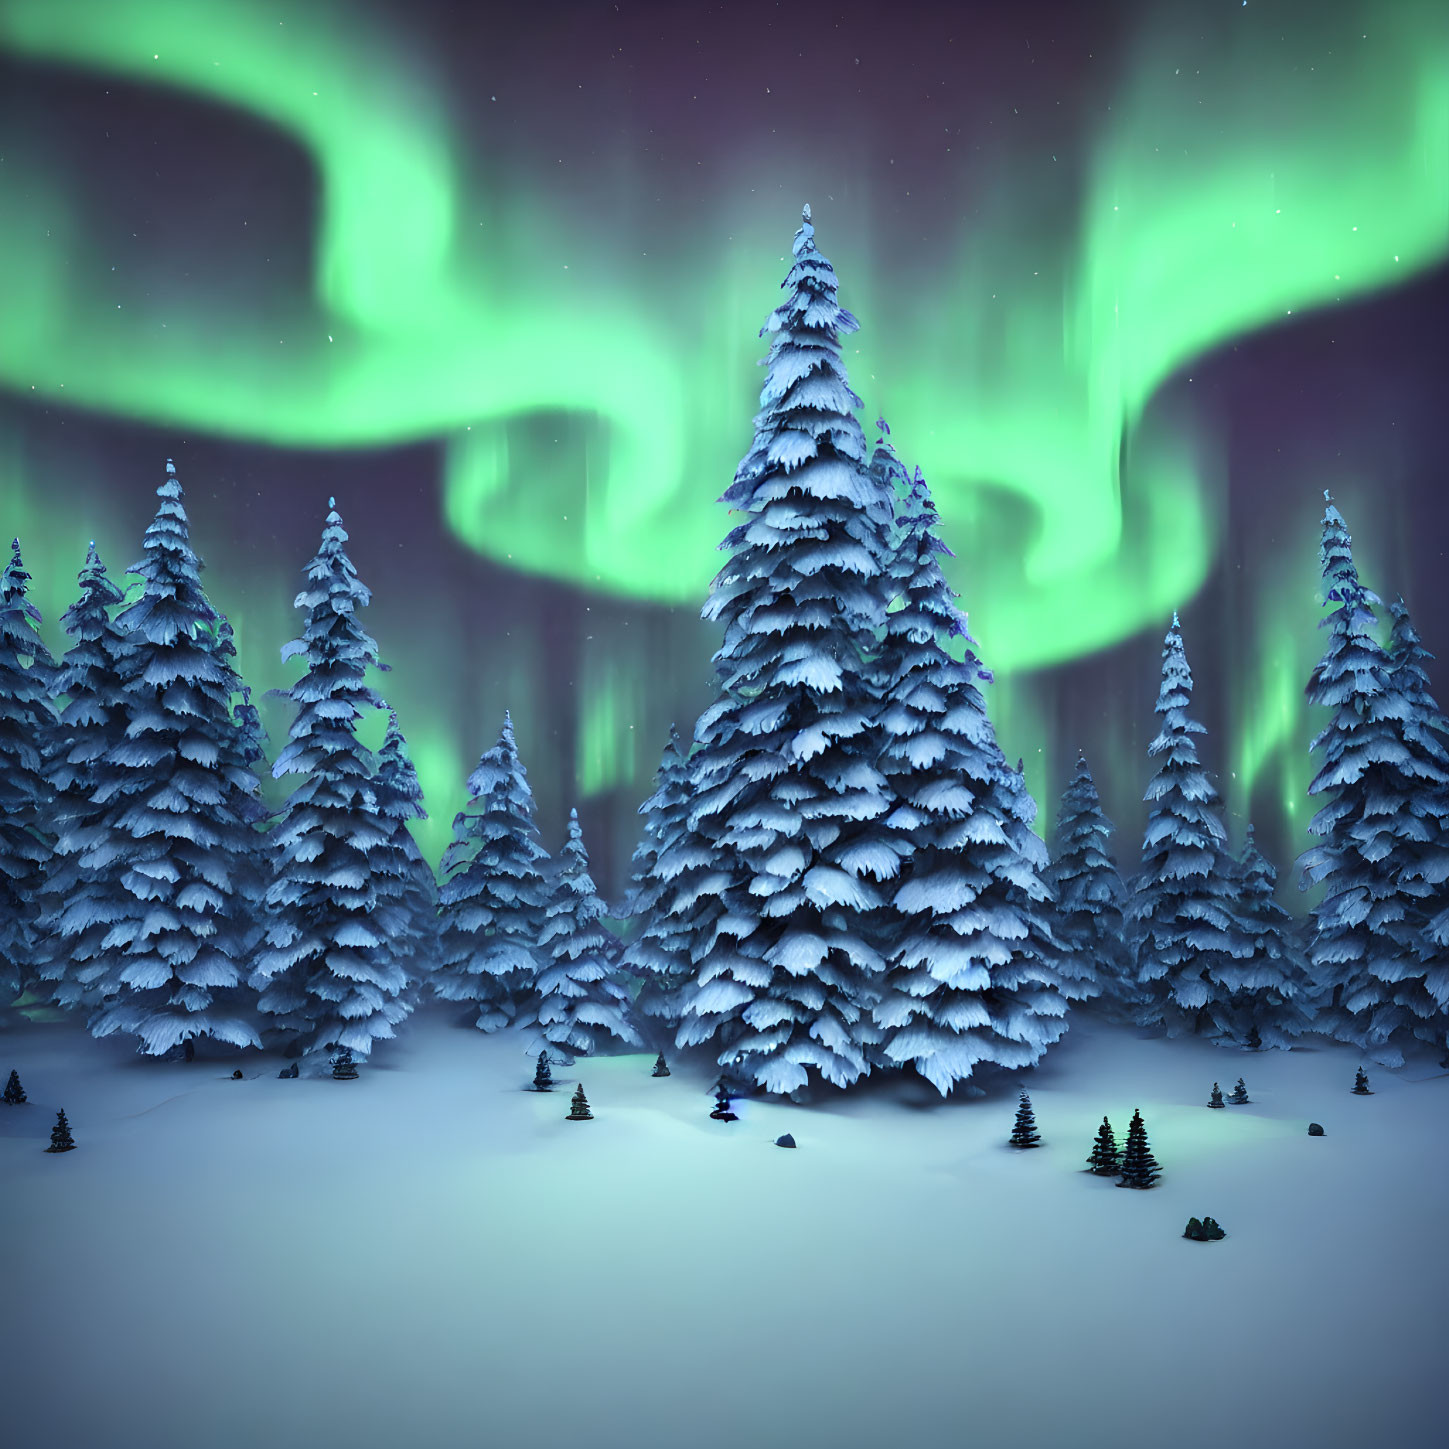 Winter scene: Snow-covered pine trees under green aurora borealis